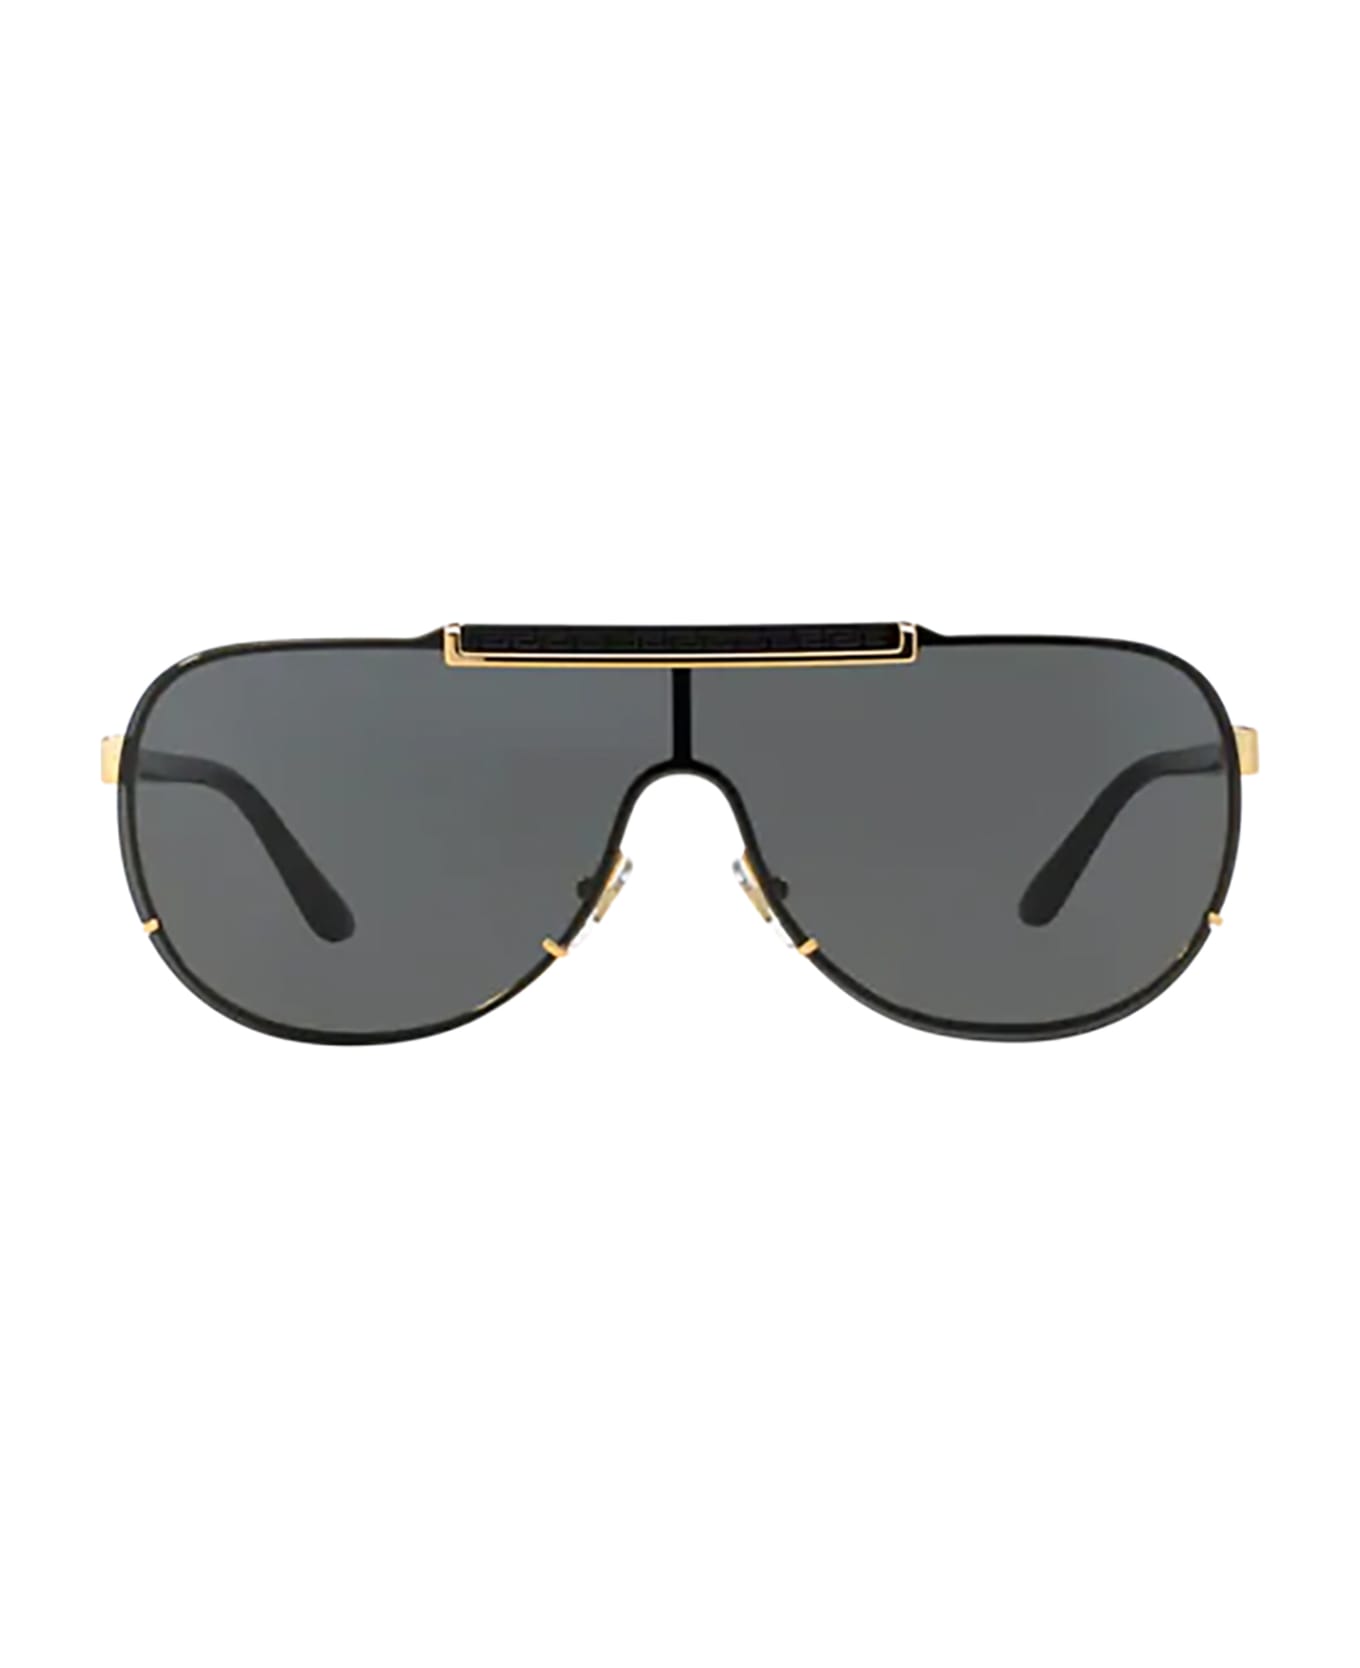 Versace Eyewear Ve2140 Gold Sunglasses - Gold